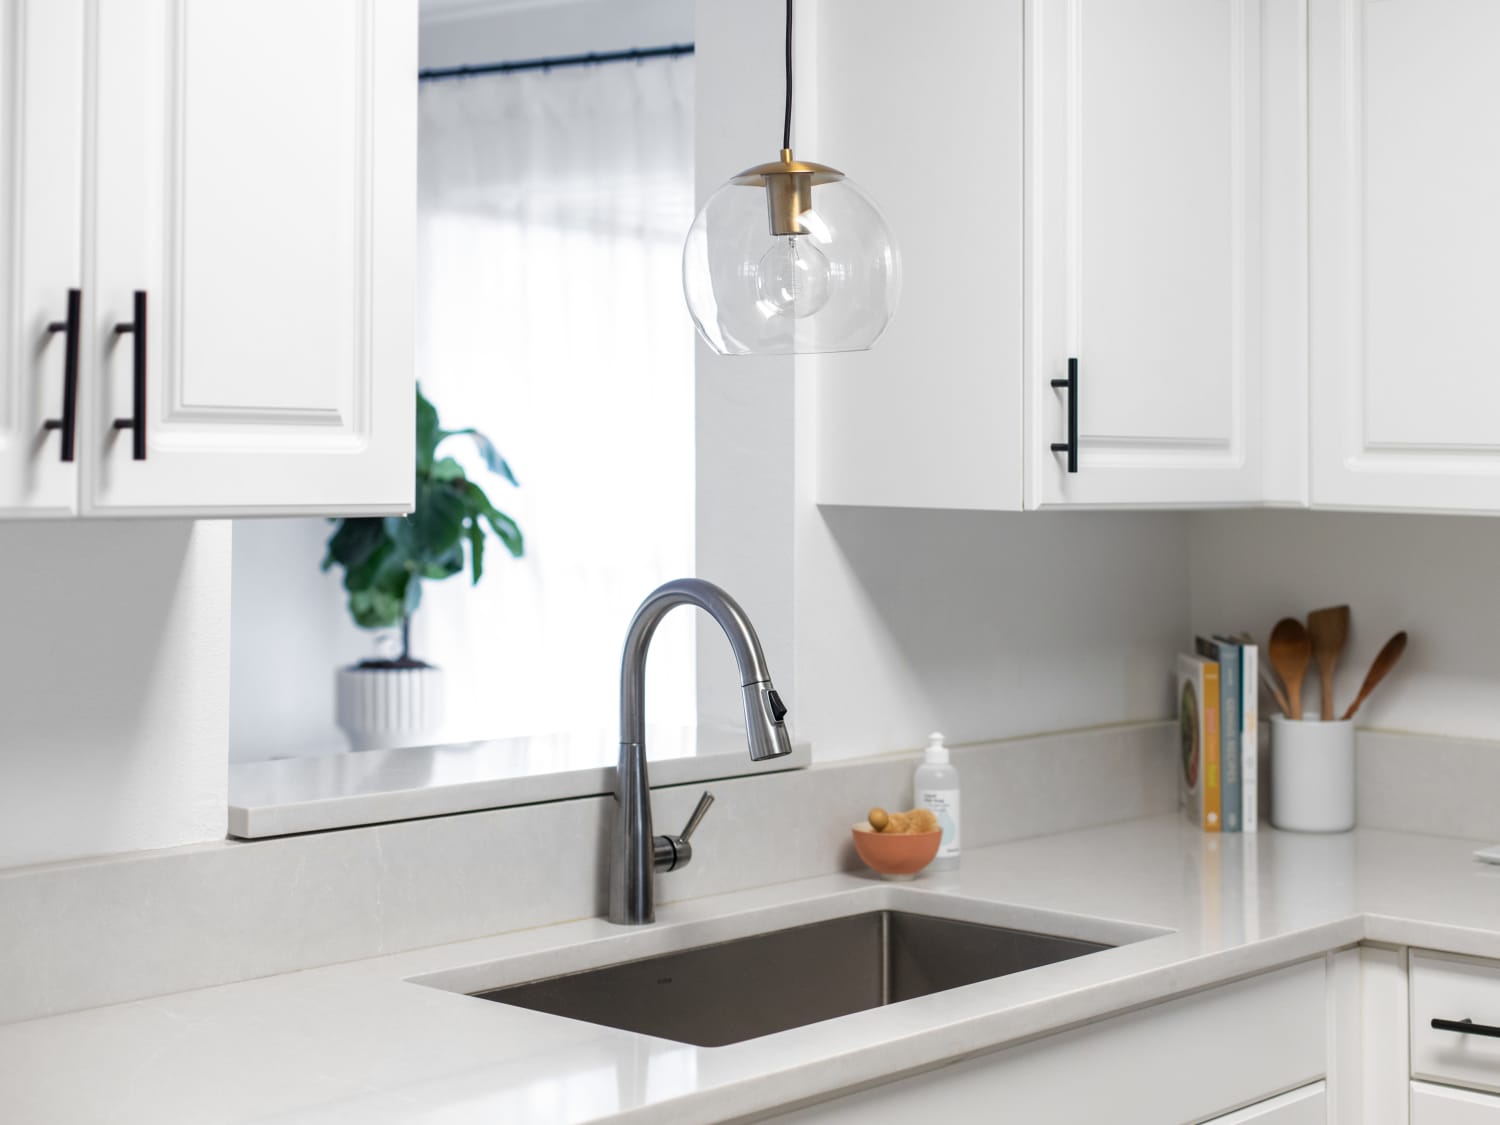 triple pendant light for over kitchen sink